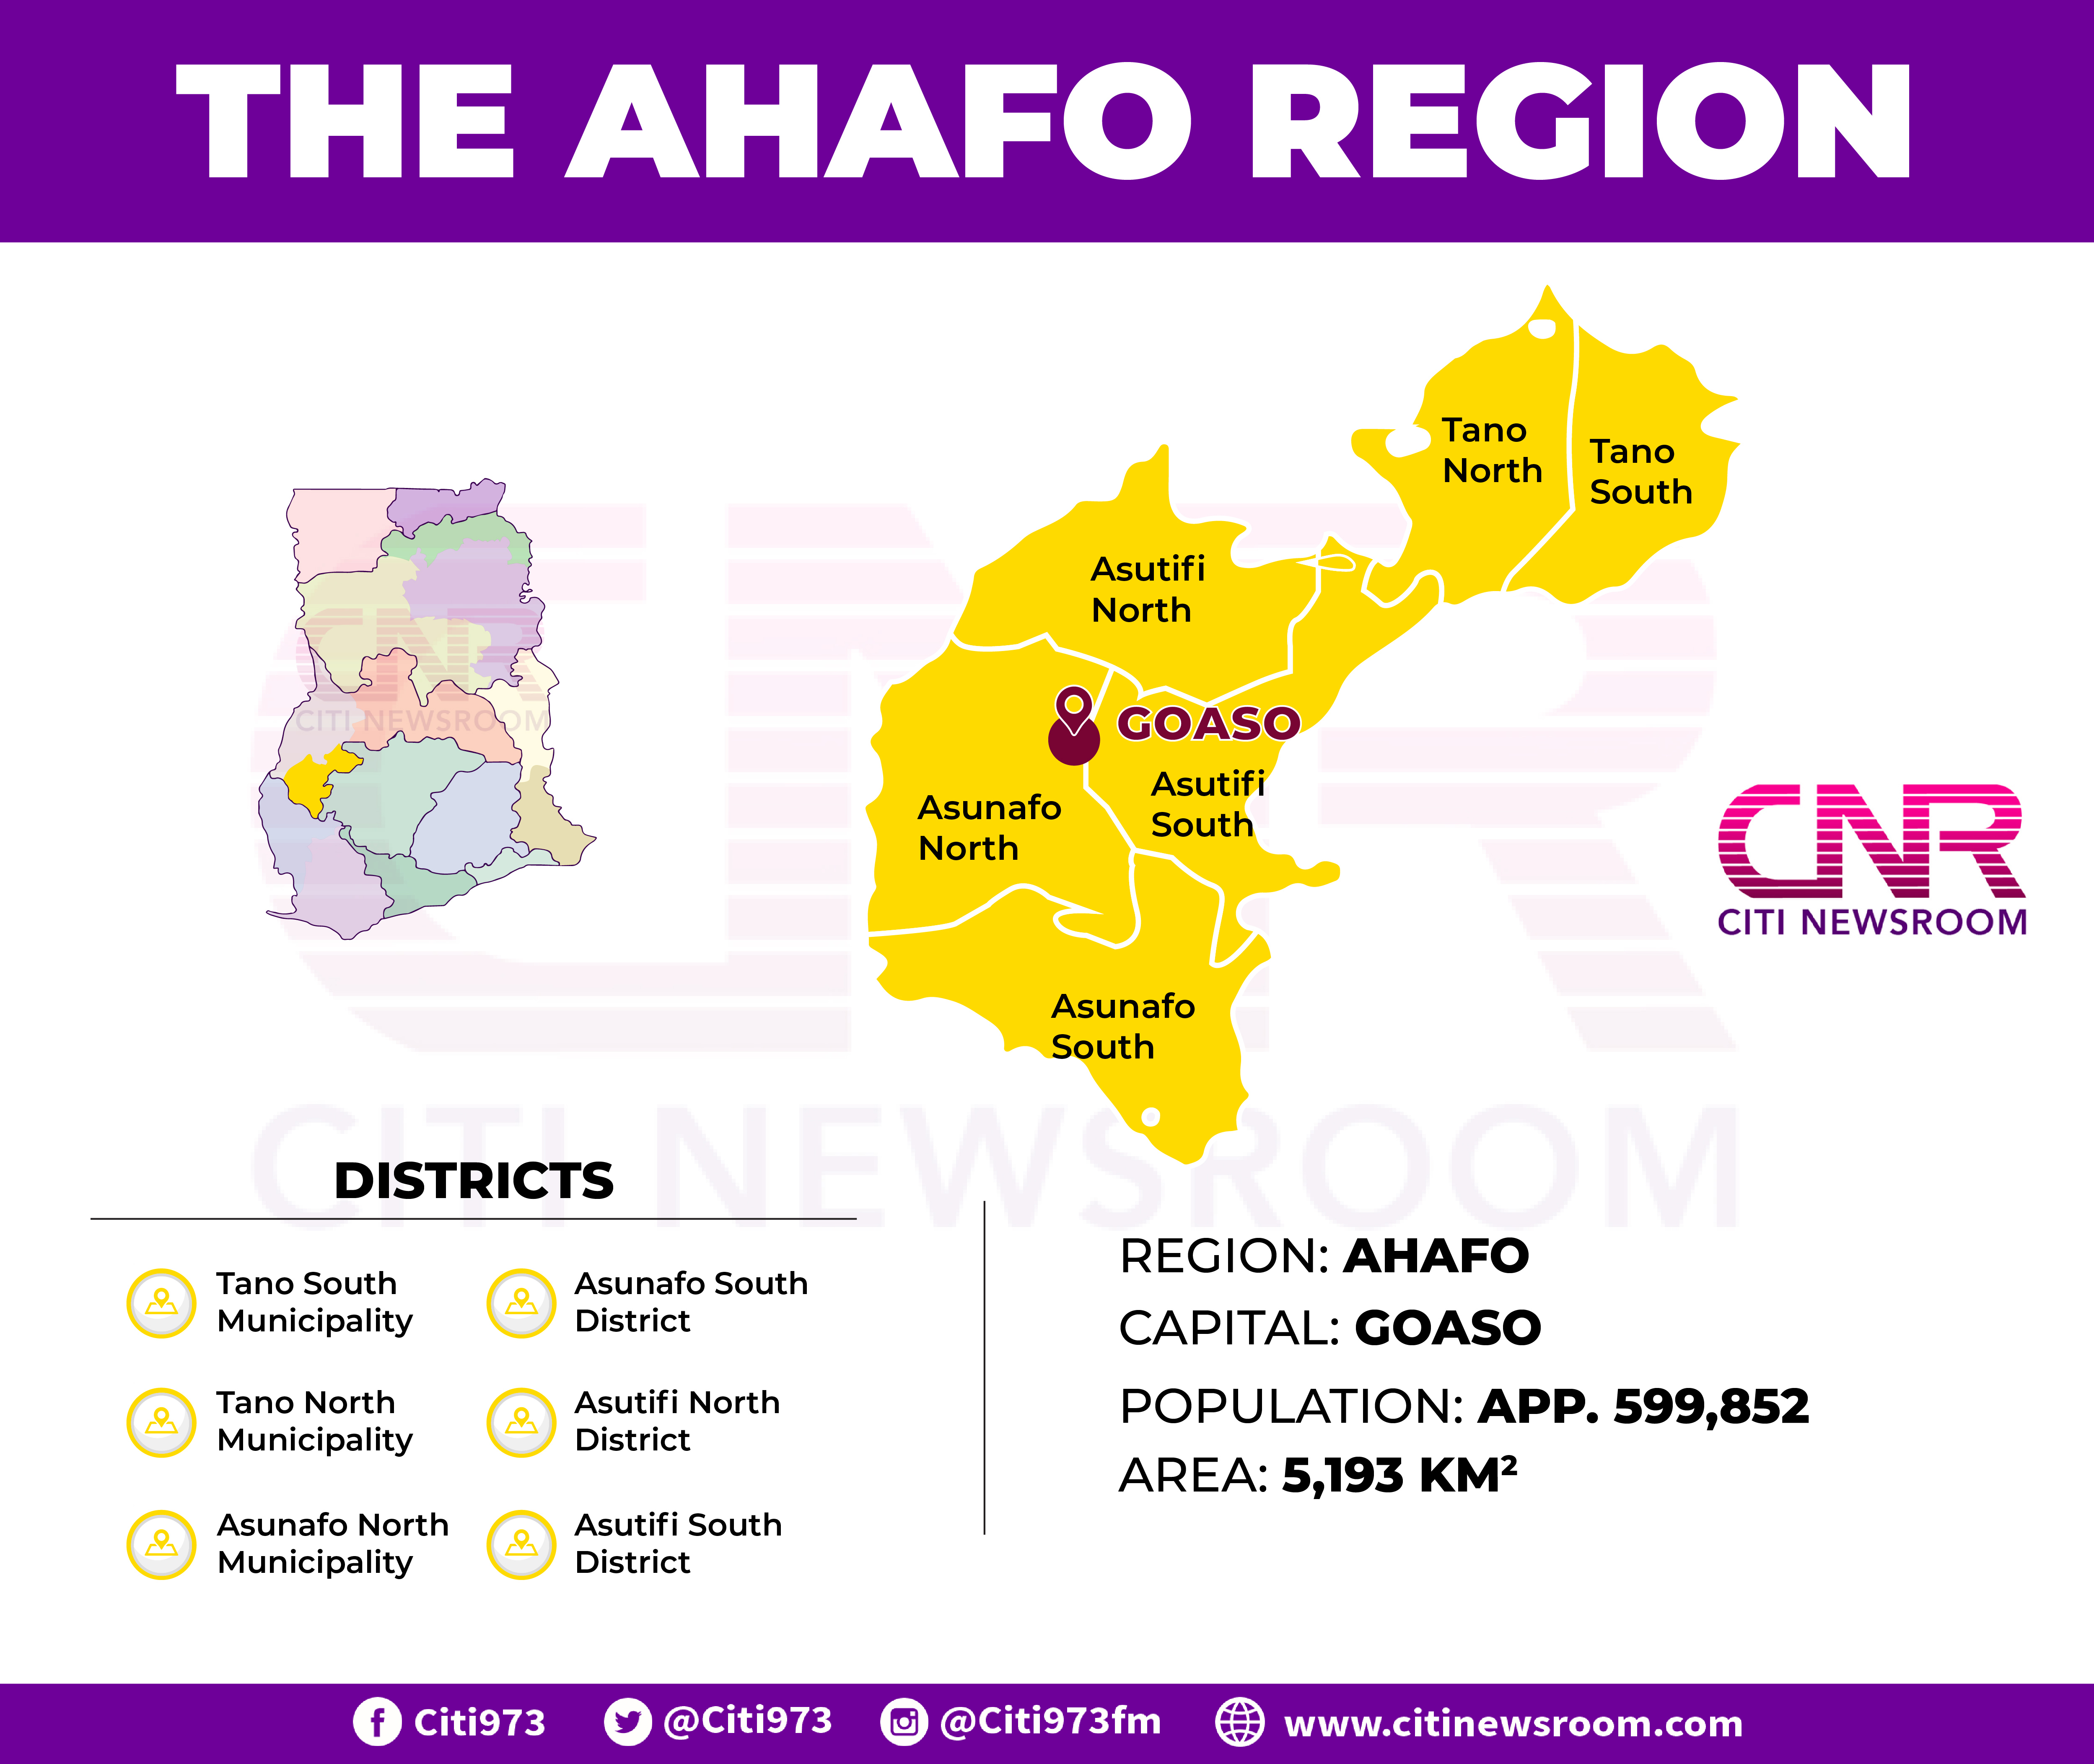 Goaso named capital for newly created Ahafo Region